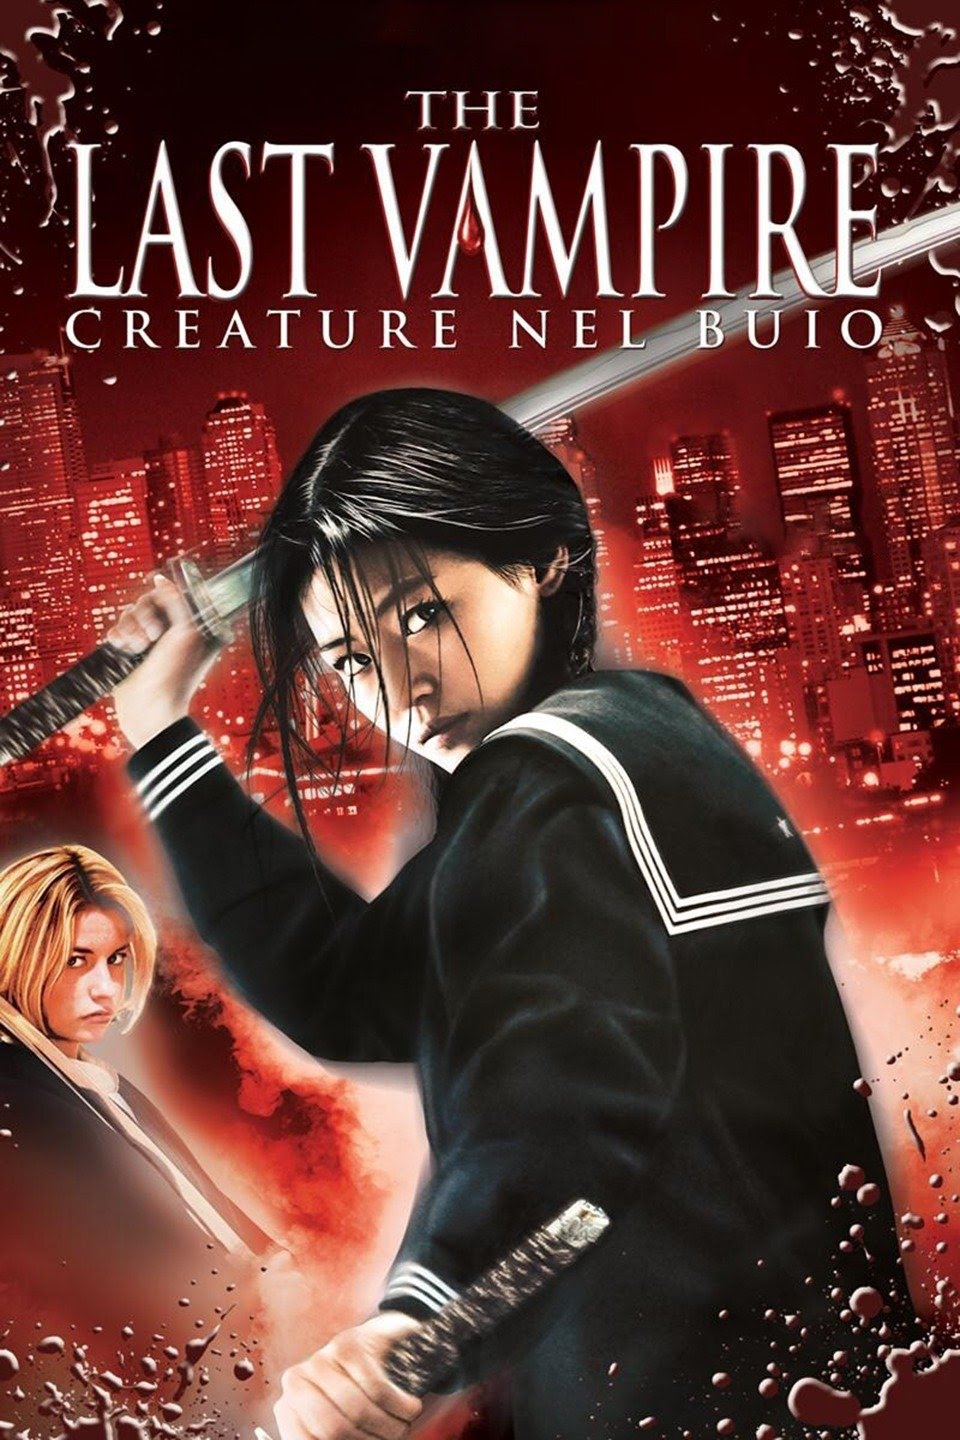 The Last Vampire – Creature nel buio [HD] (2009)